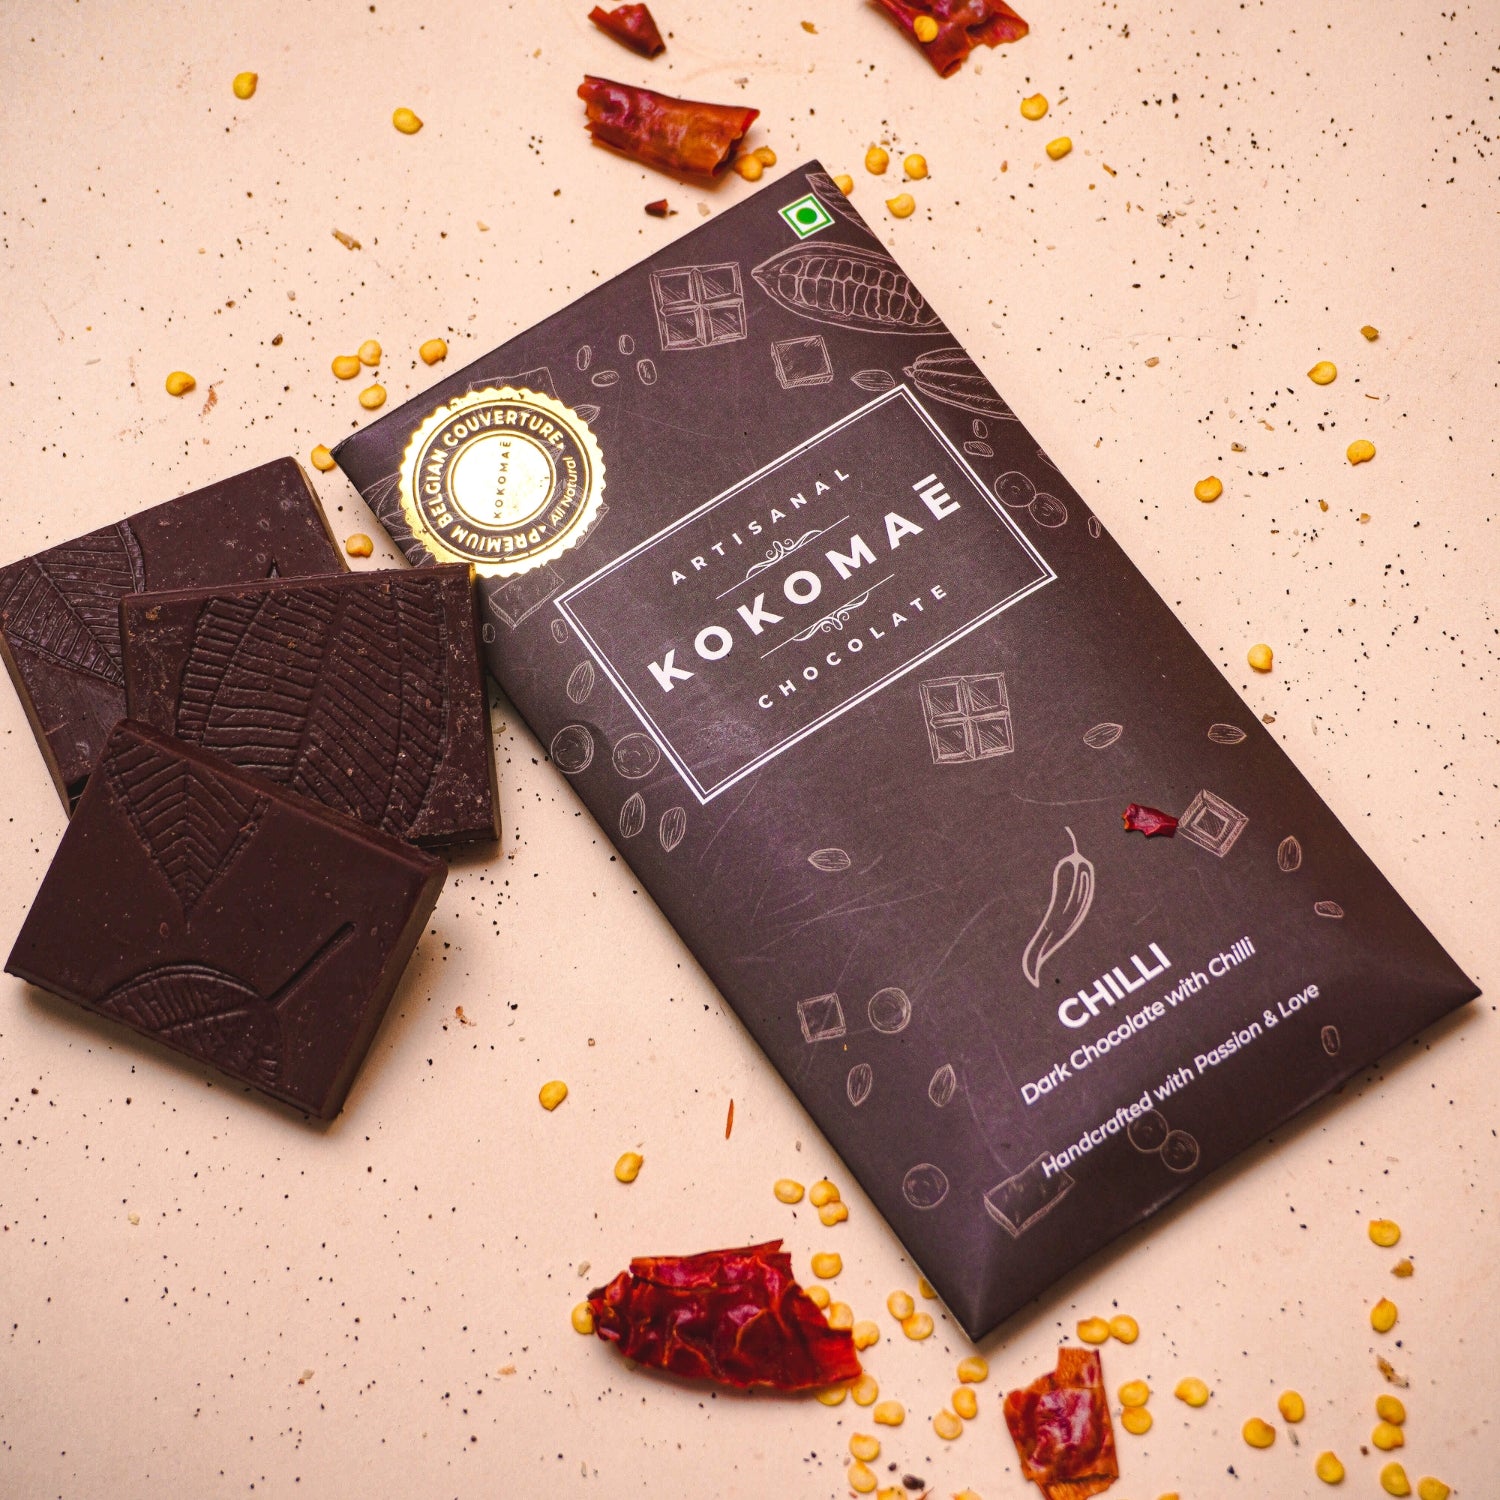 Kokomaē Diwali Chocolate Gift with 5 Belgian Bars & an offering